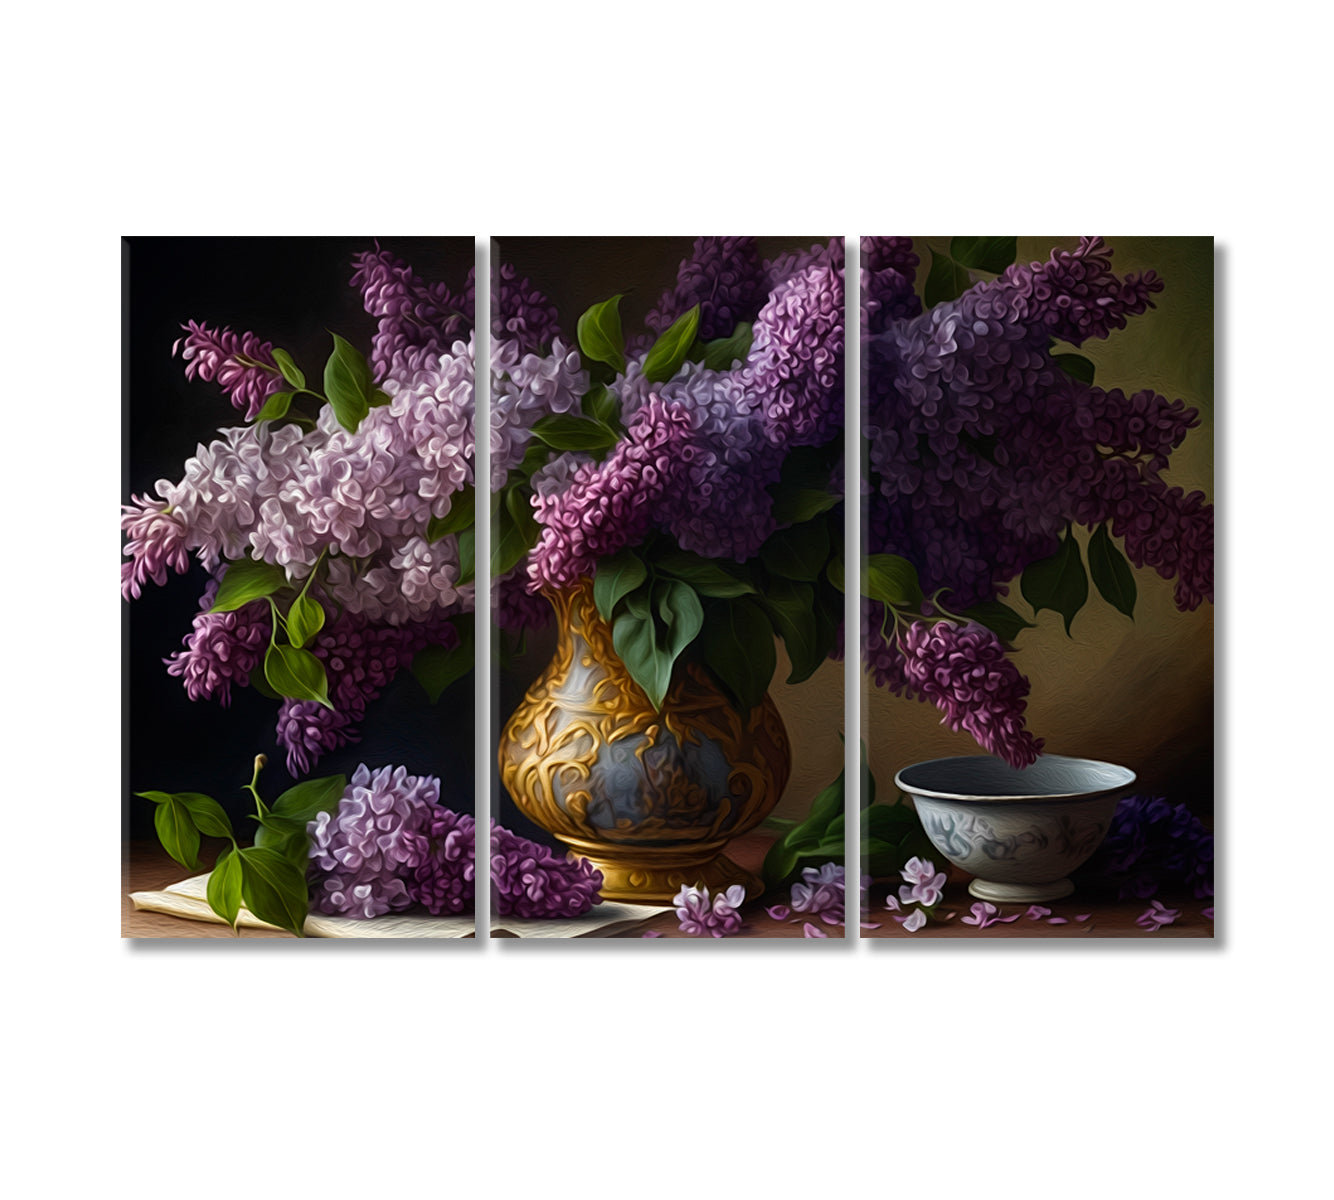 Lilacs Bouquet Still Life Modern Art-Canvas Print-CetArt-3 Panels-36x24 inches-CetArt